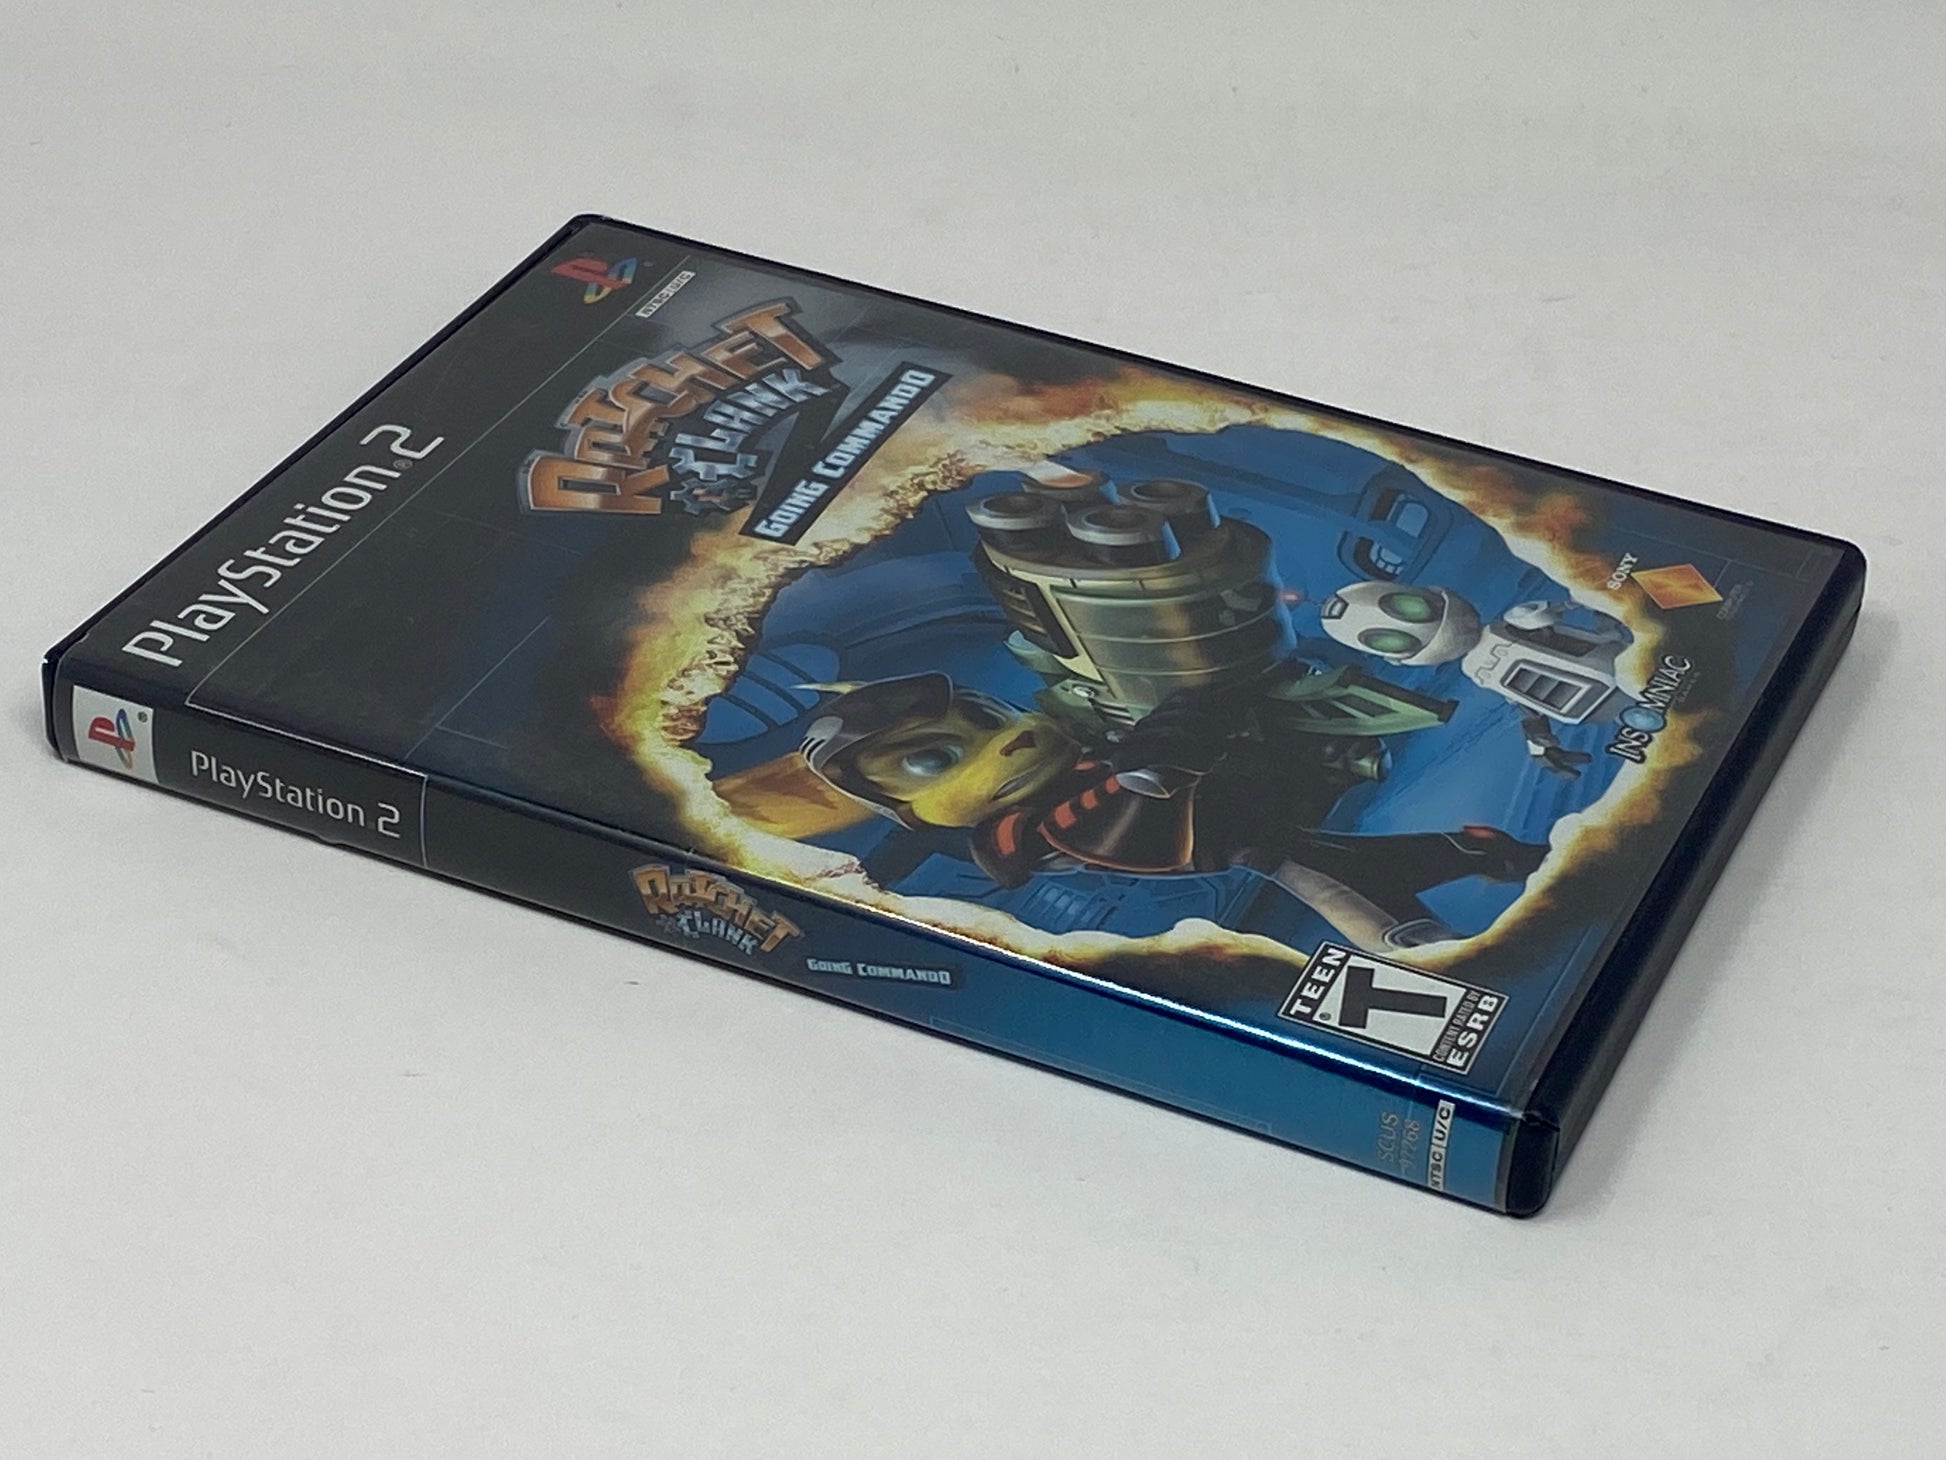 Ratchet & Clank: Going Commando  (PS2) Gameplay 